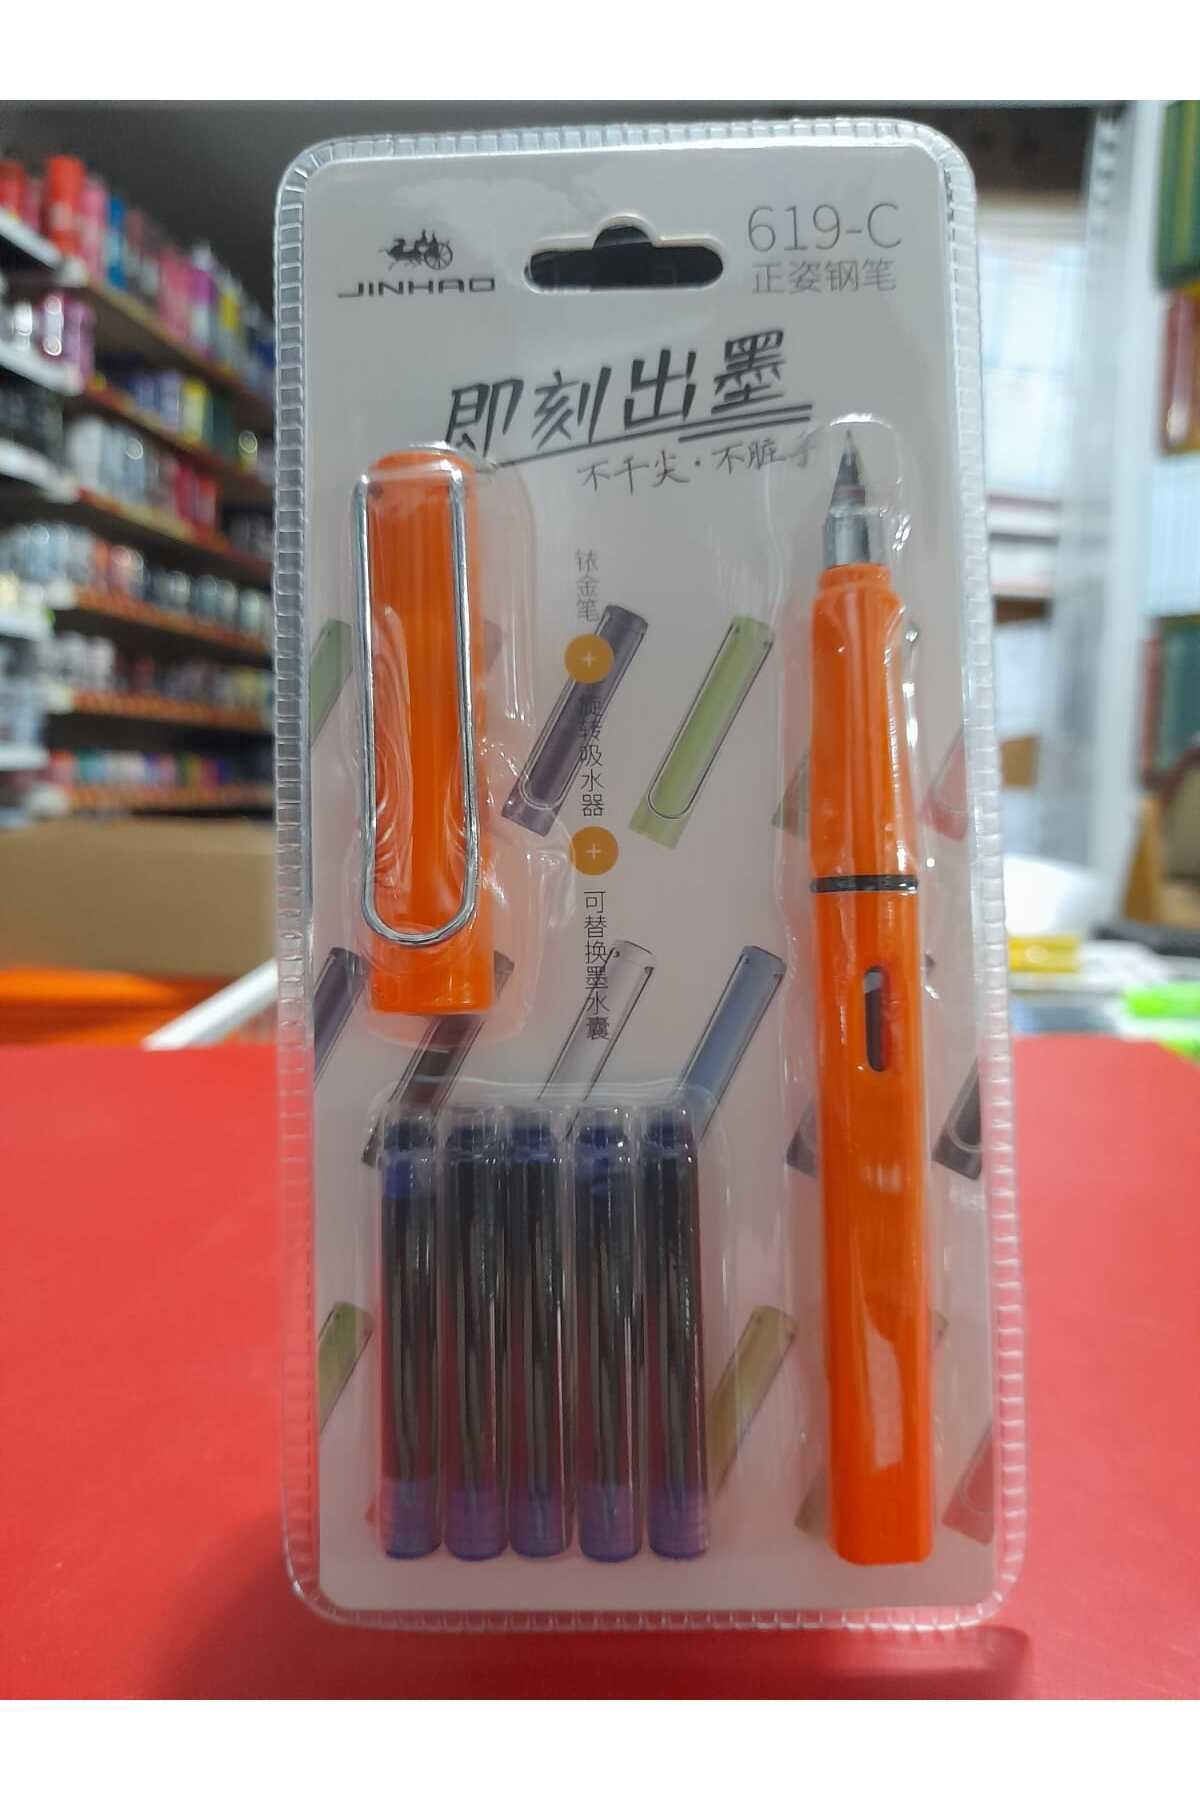 jinhao dolma kalem seti OPAK GÖVDE TURUNCU renk (F) 0,60mm uç kalem+5 kartuş sert plastik gövde